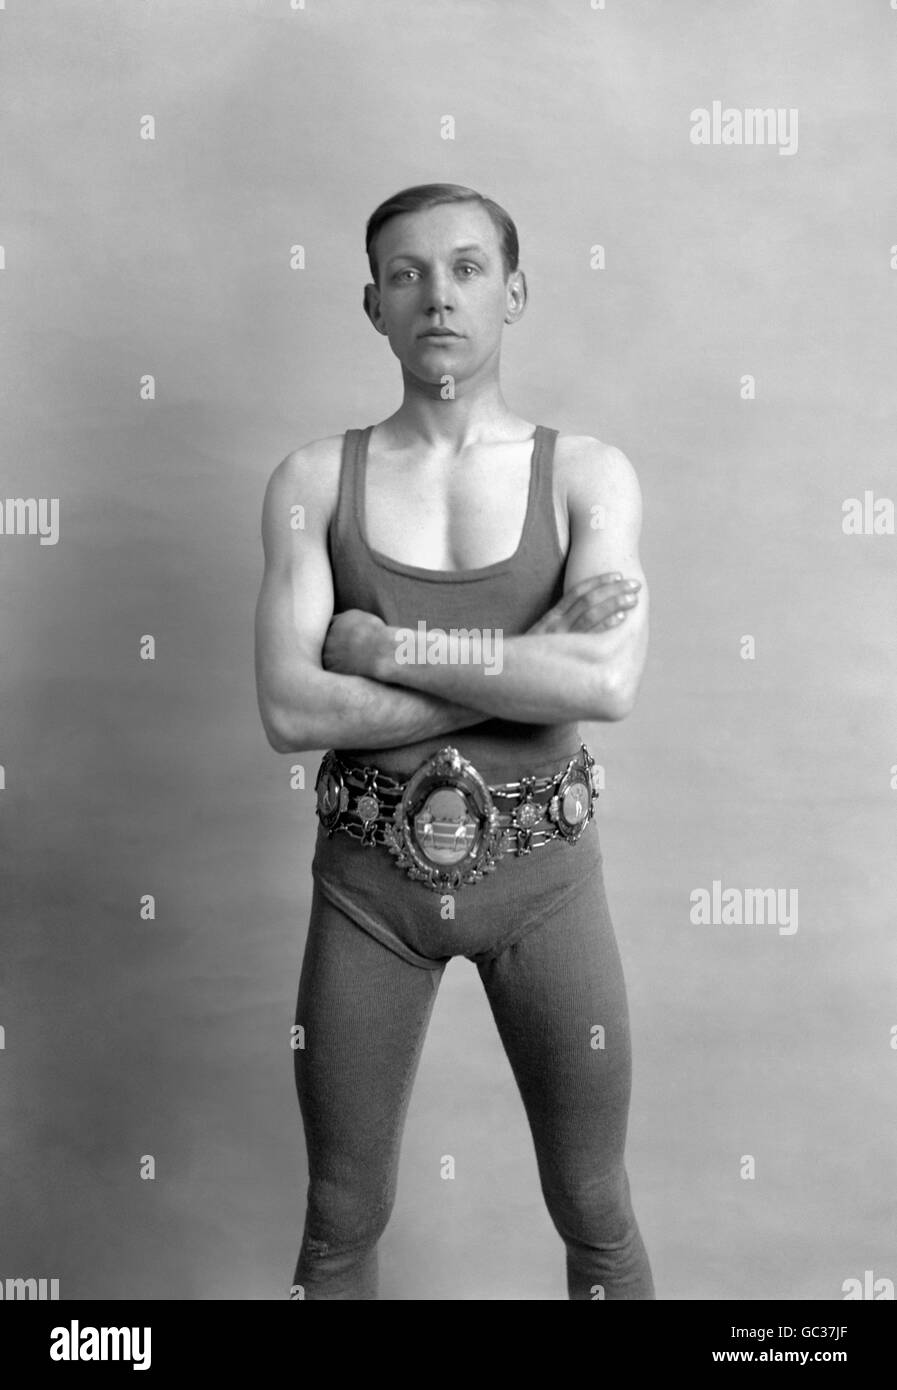 Boxing - Flyweight - Jimmy Wilde. Jimmy Wilde, 'The Mighty Atom', World Flyweight champion. Stock Photo